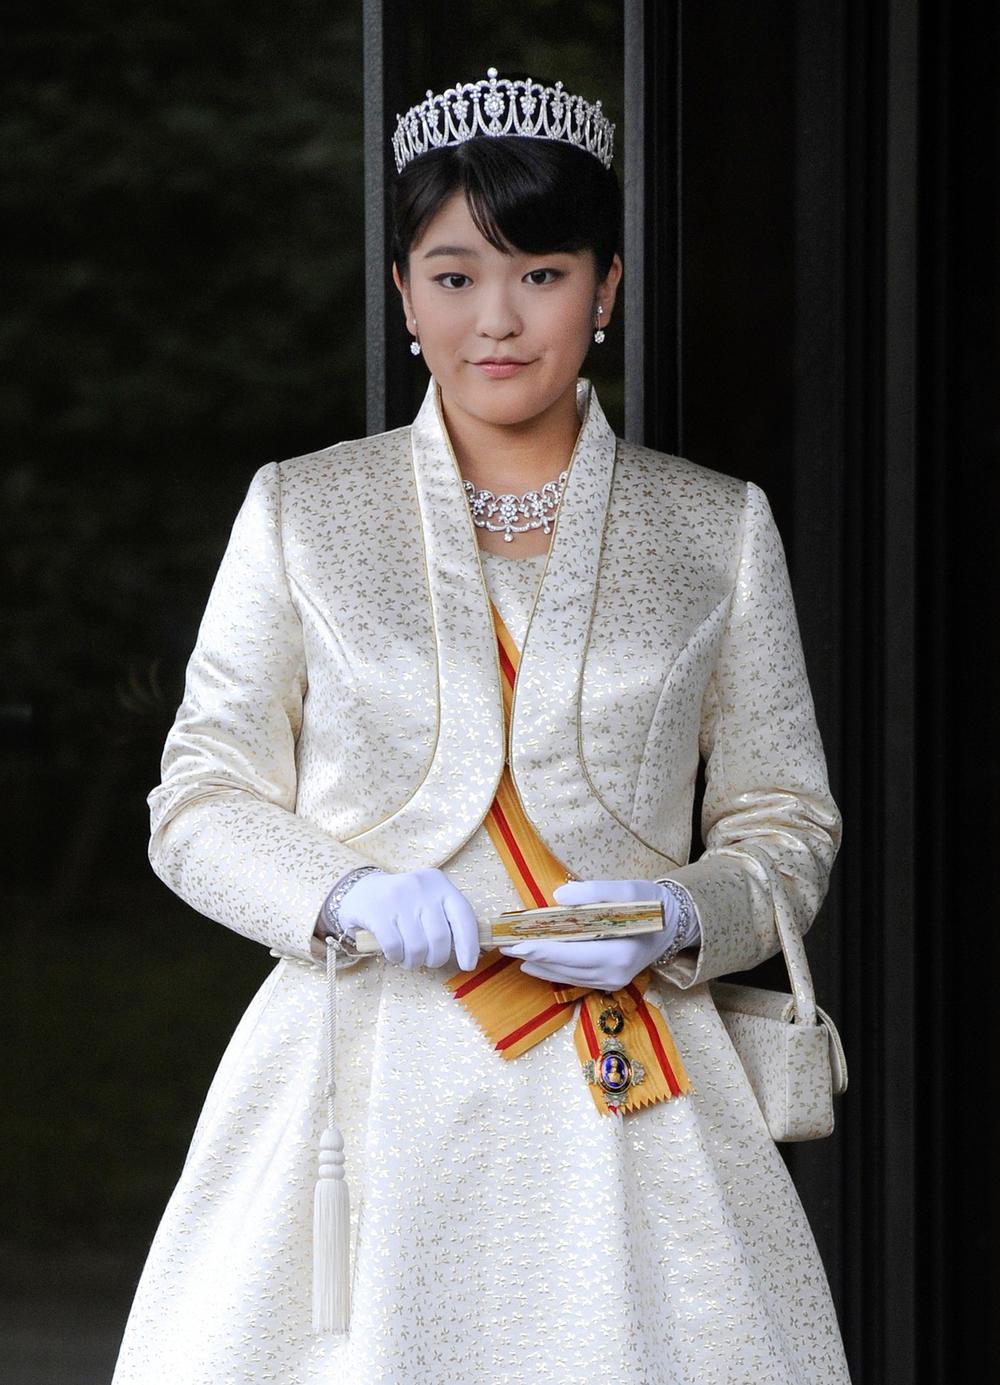 <p><strong>Princeza Mako</strong>, ćerka<strong> princa Fumuhita</strong>, brata i naslednika japanskog<strong> cara Naruhita</strong>, udala se za mladog pravnika i odrekla se svih beneficija koje je podrazumevao njen položaj, a onda stala ispred predstavnika medija kako bi otvoreno rekla šta joj je na duši. I nije se suzdržavala!</p>